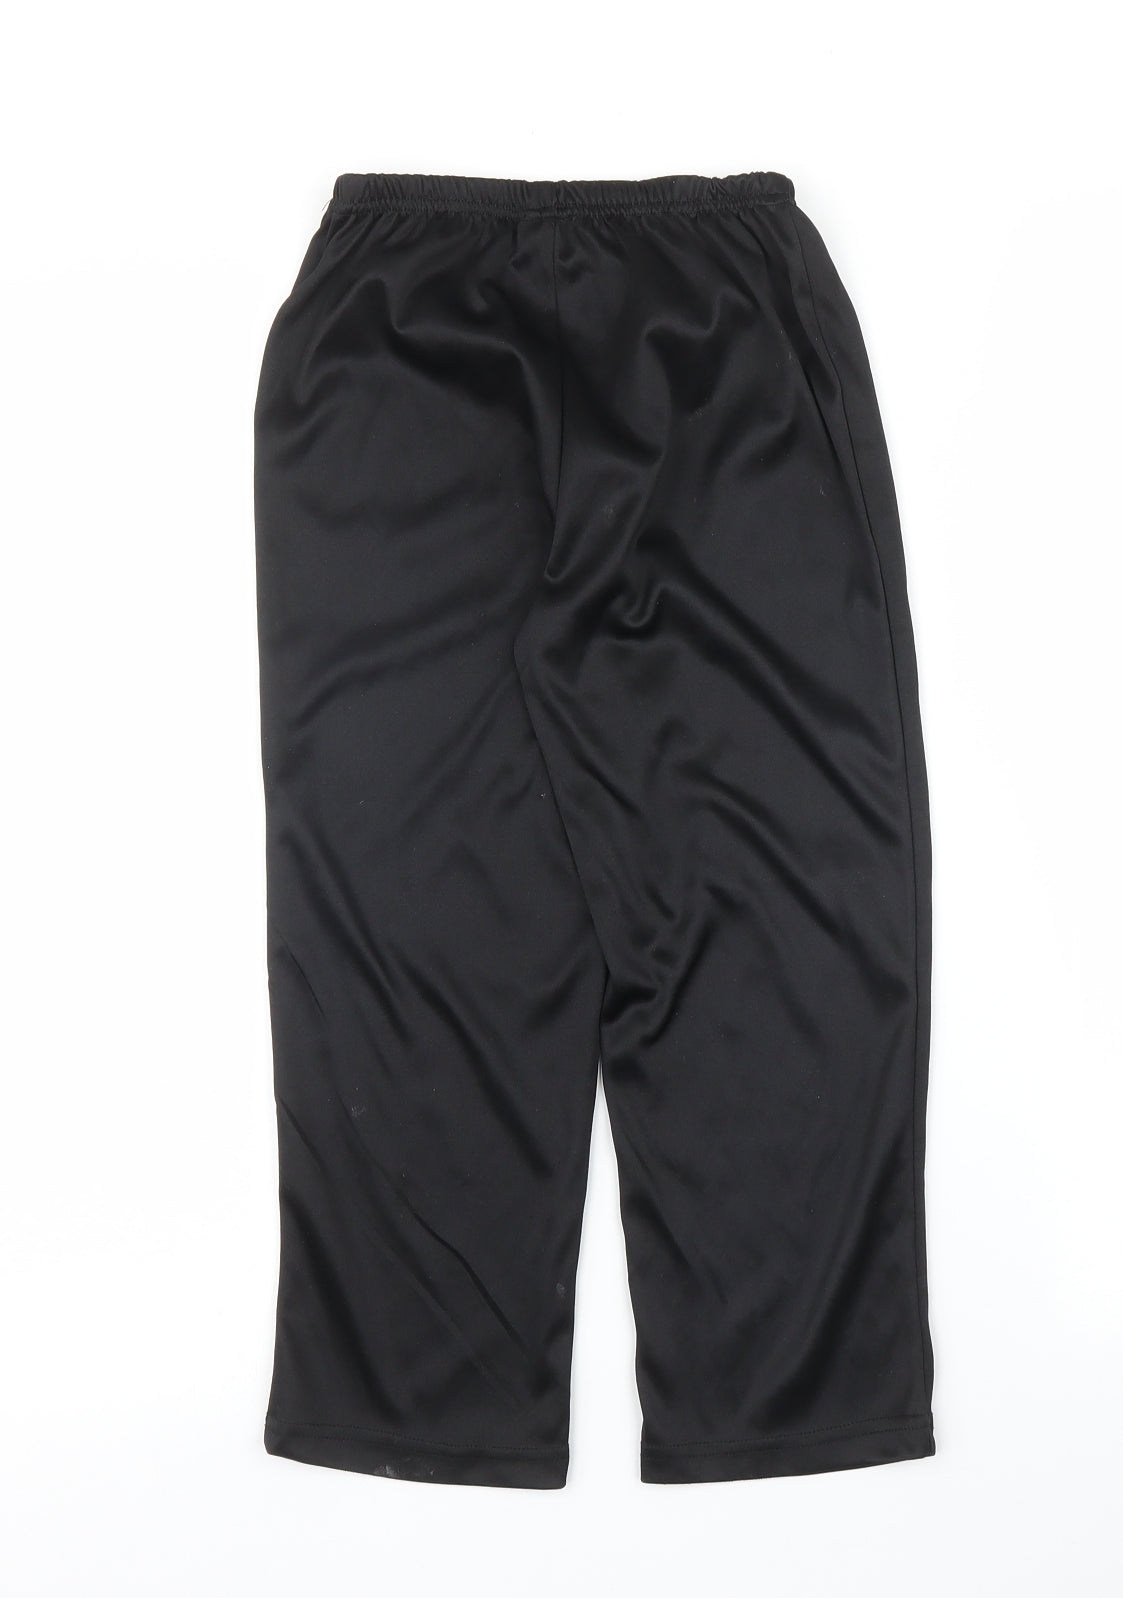 TU Boys Black   Sweatpants Trousers Size 5 Years